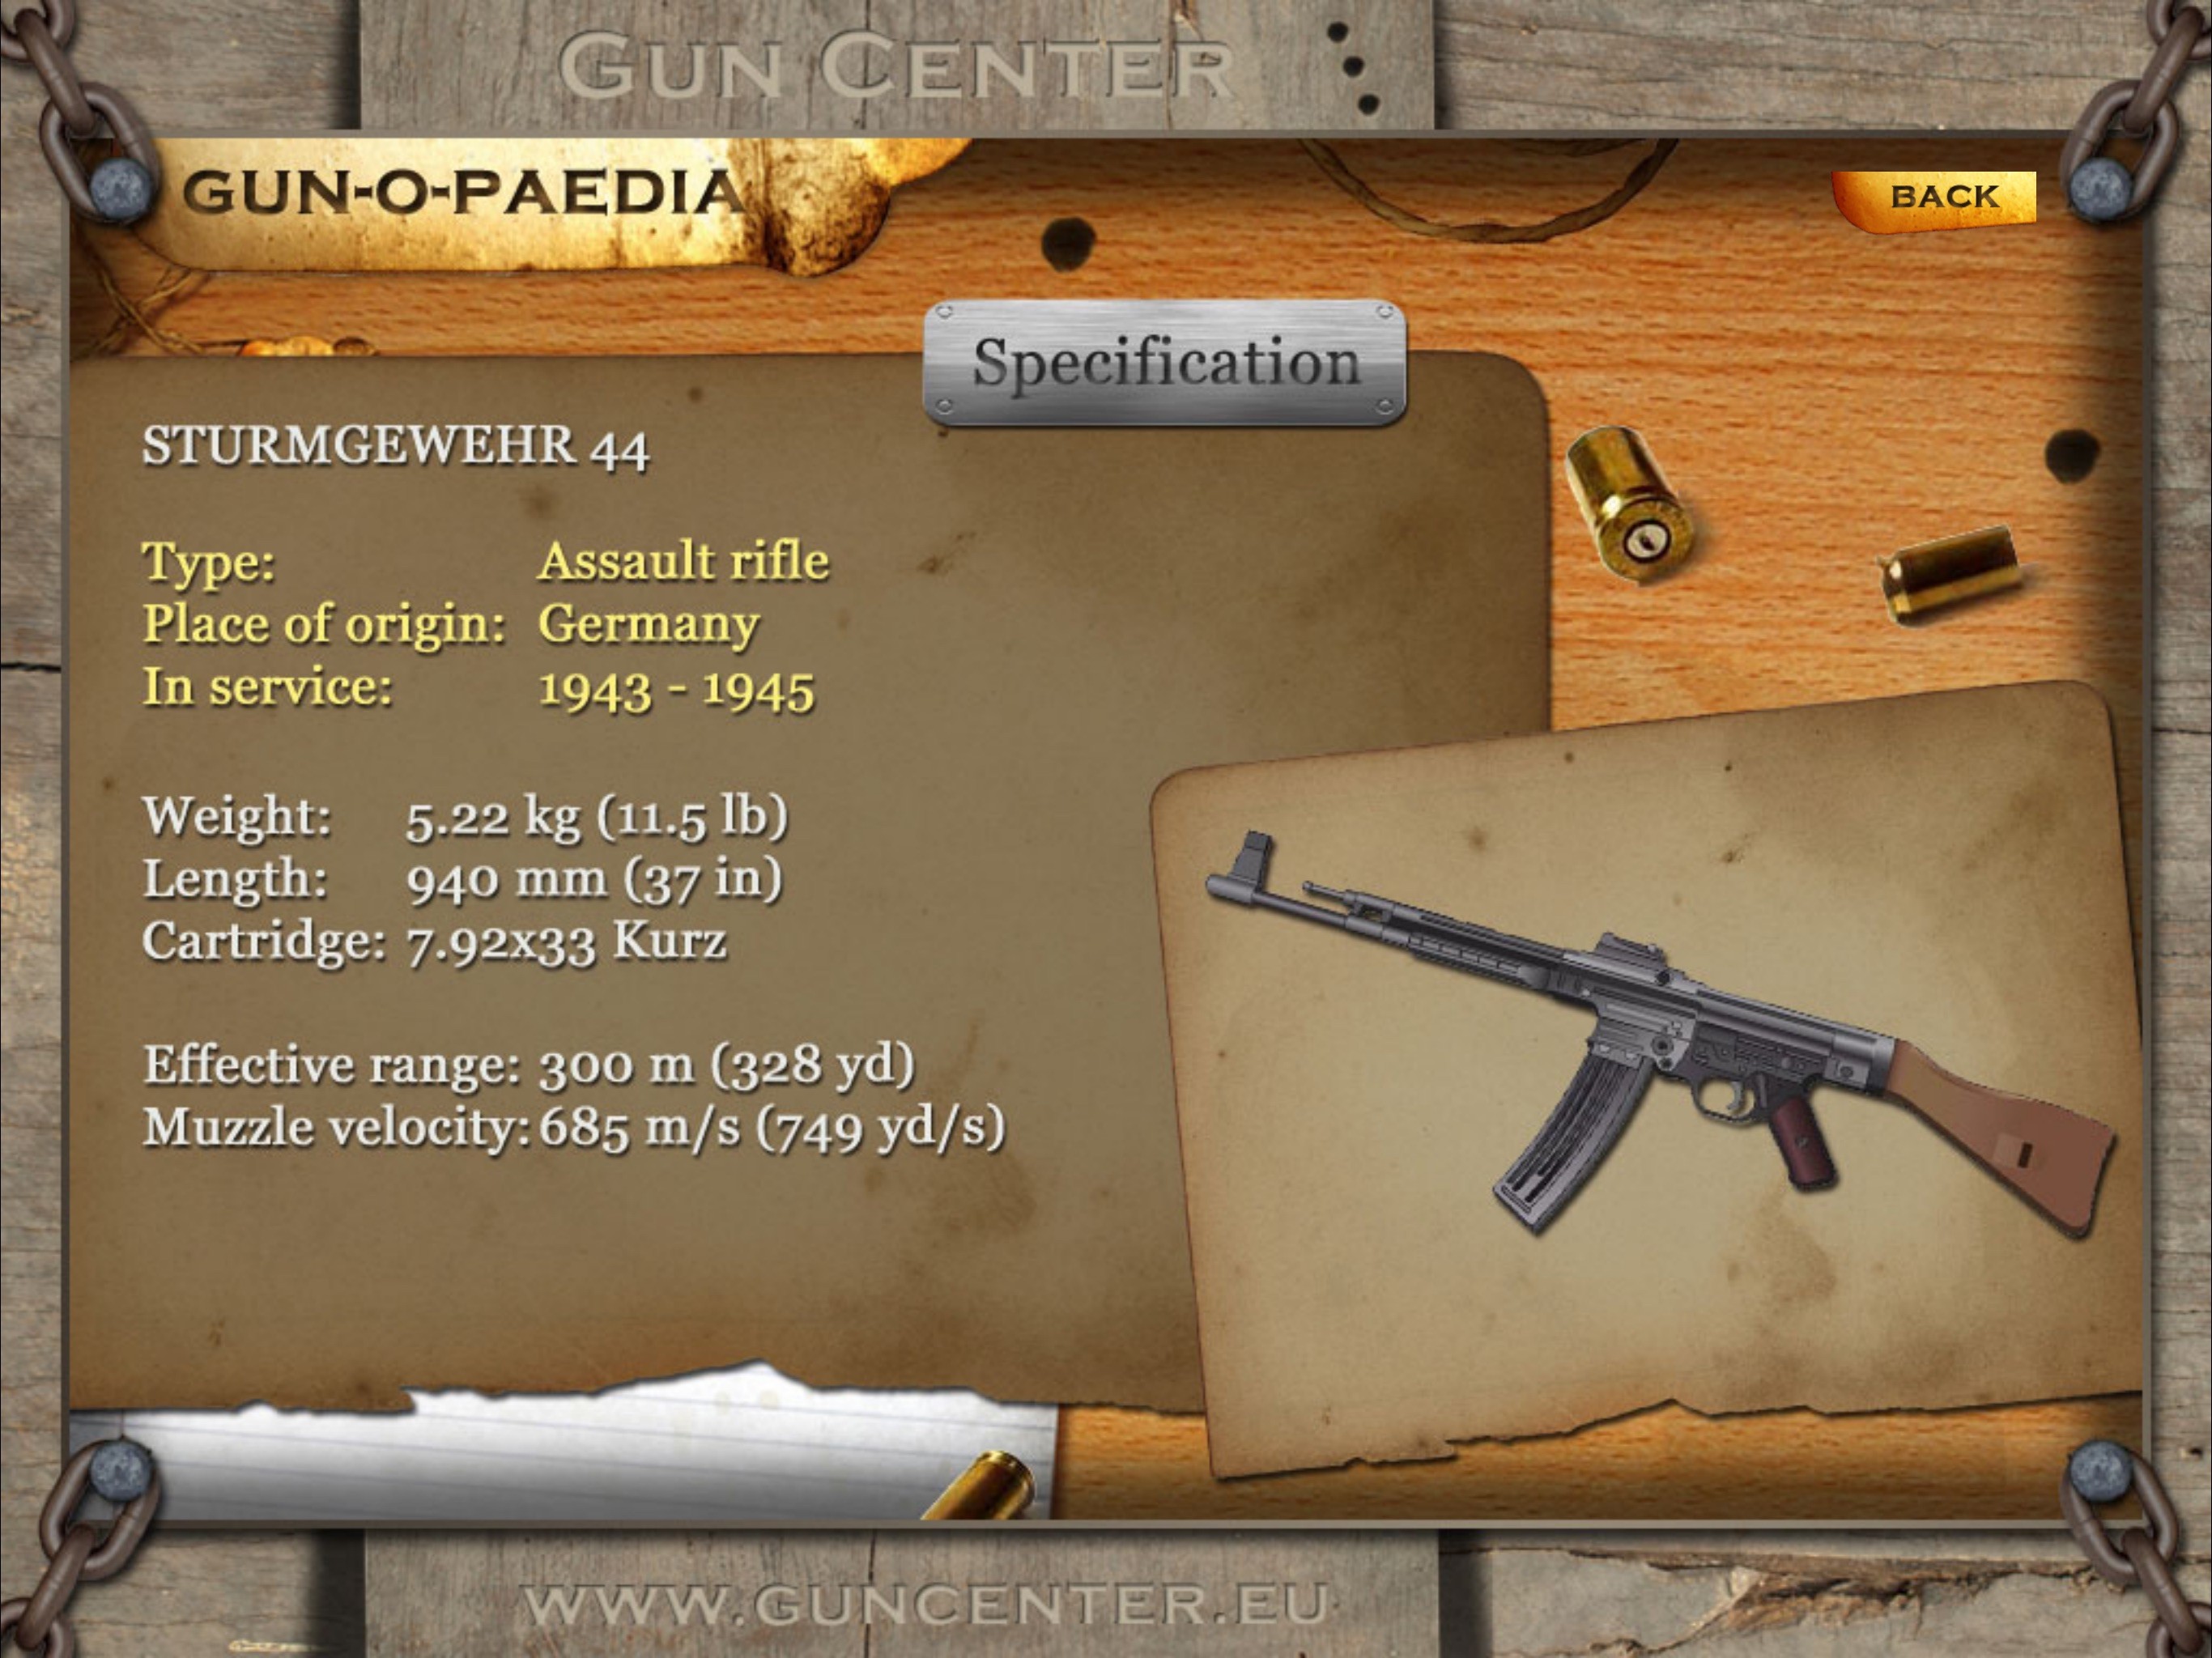 GUN CENTER Ultimate Gun Builder &Rifle Range Games